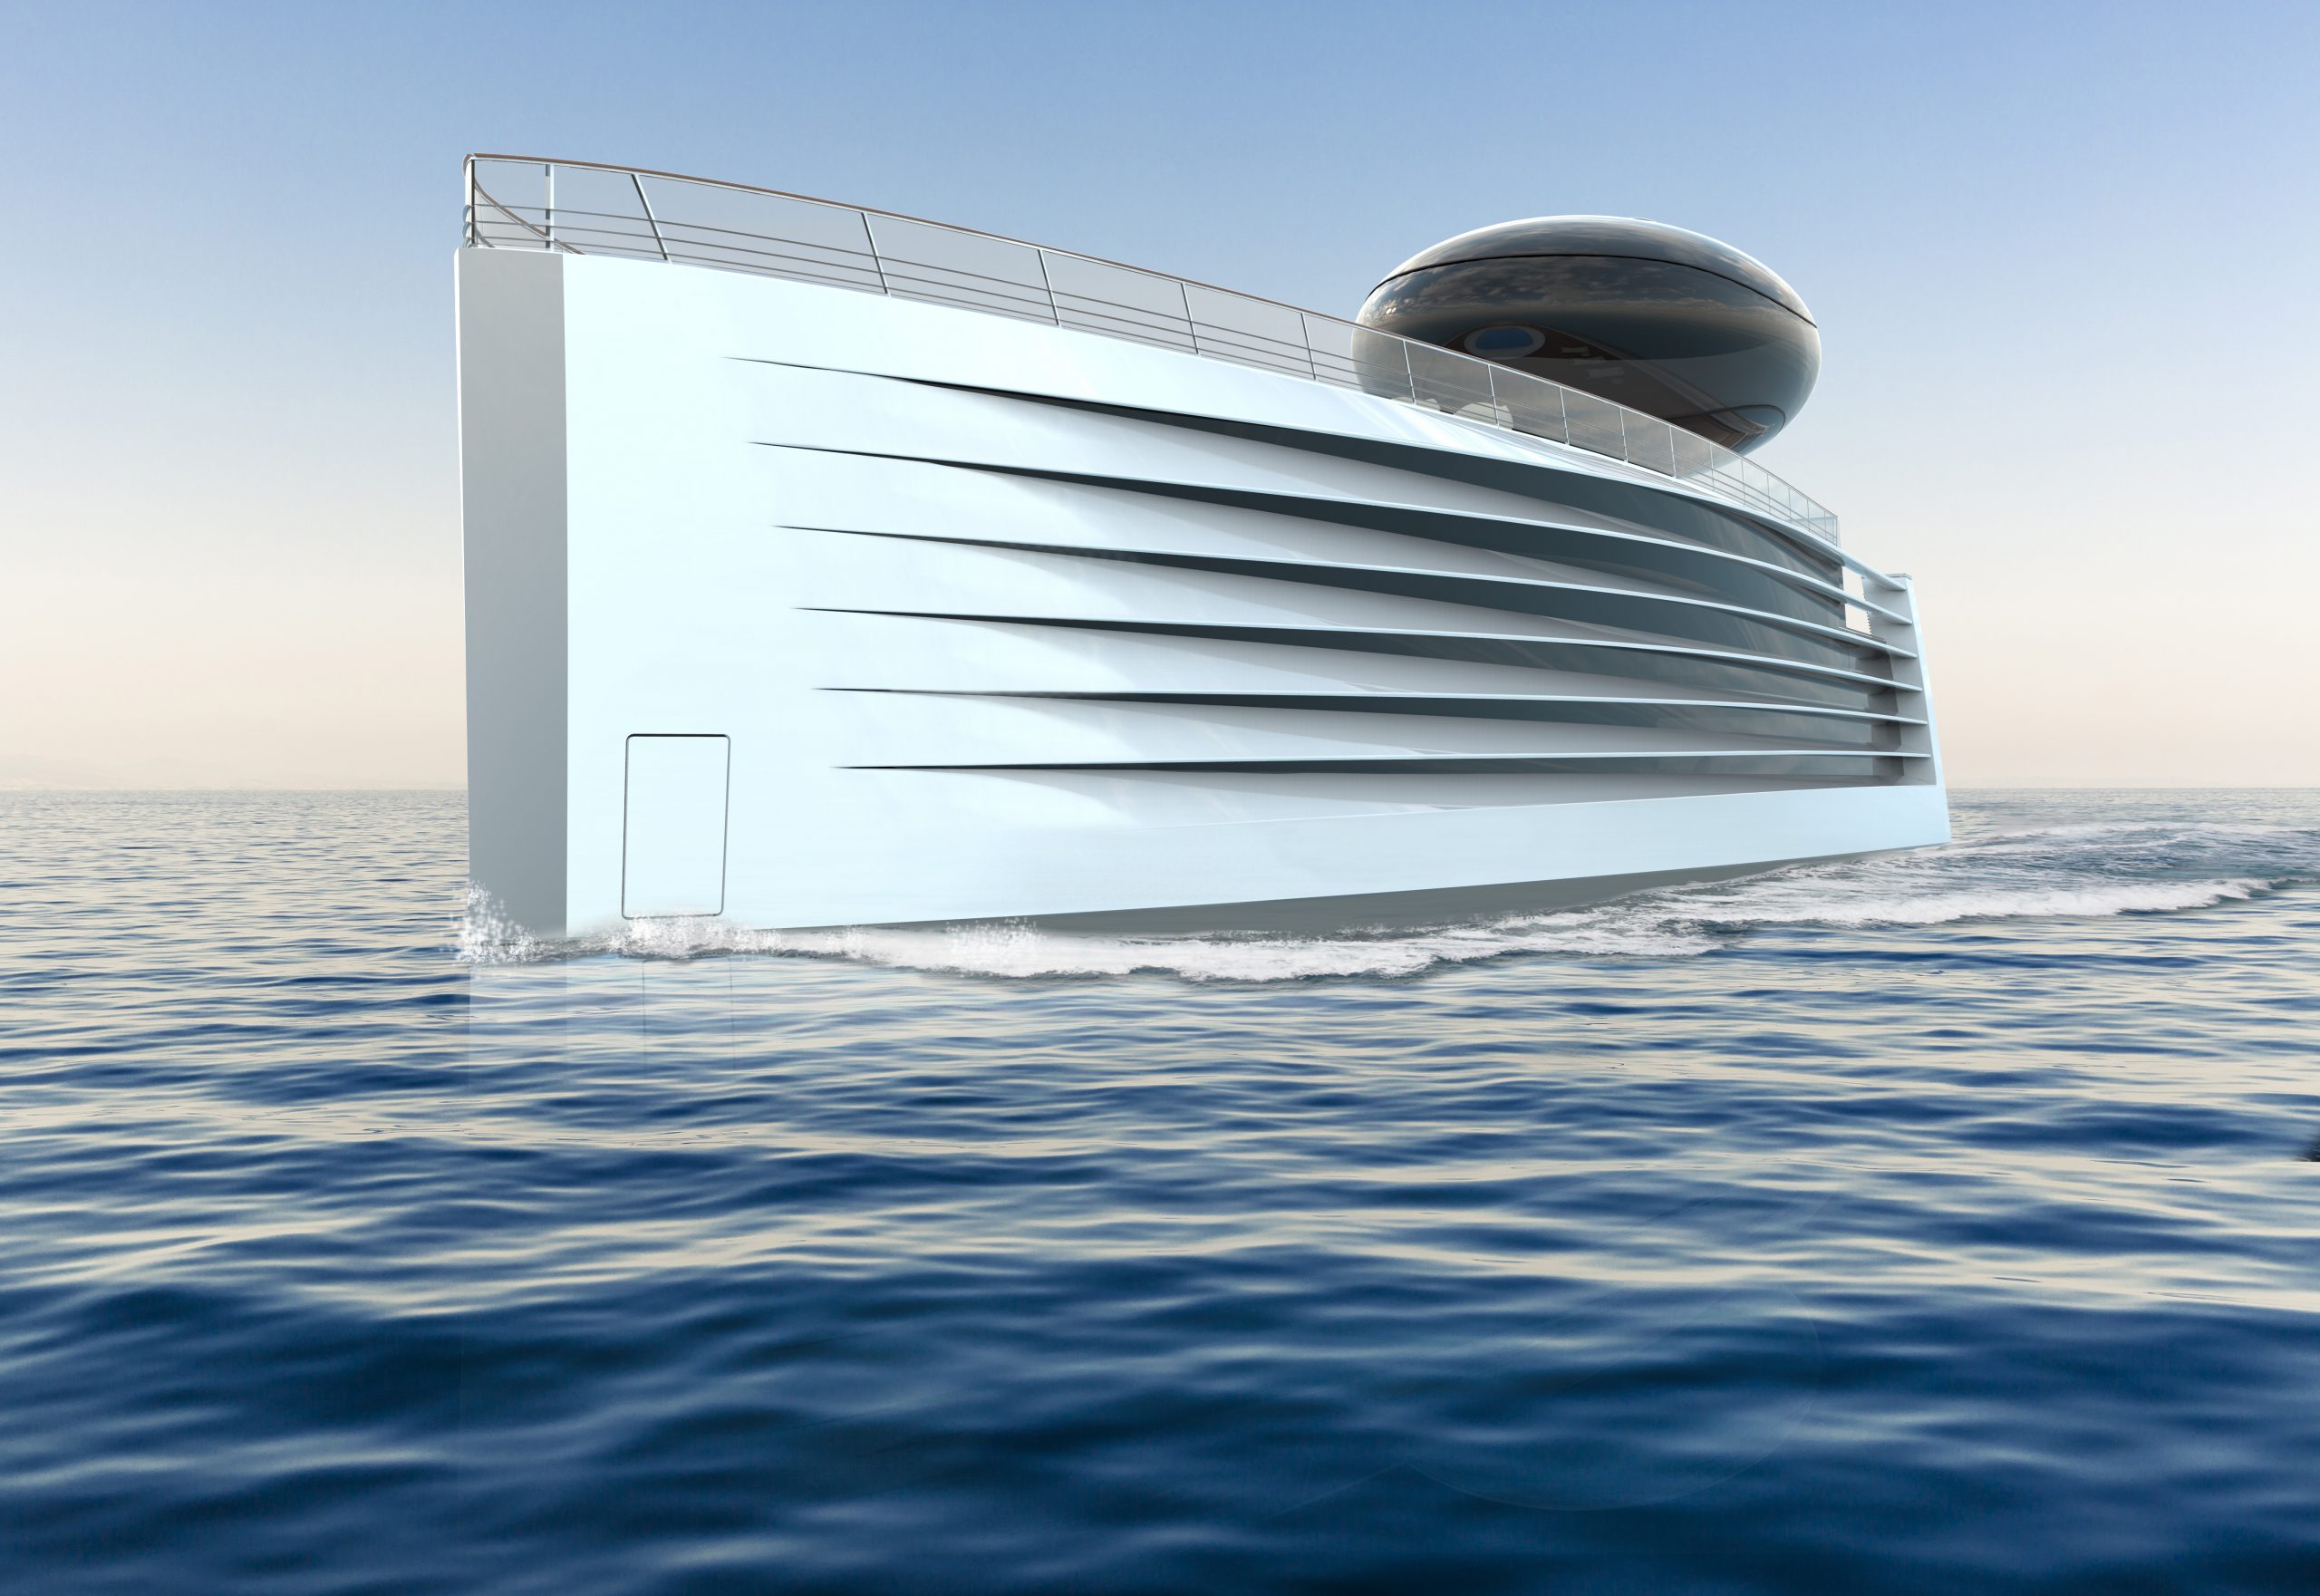 Eau electric super yacht Feadship Oceanco Studio Tjep Philippe Starck